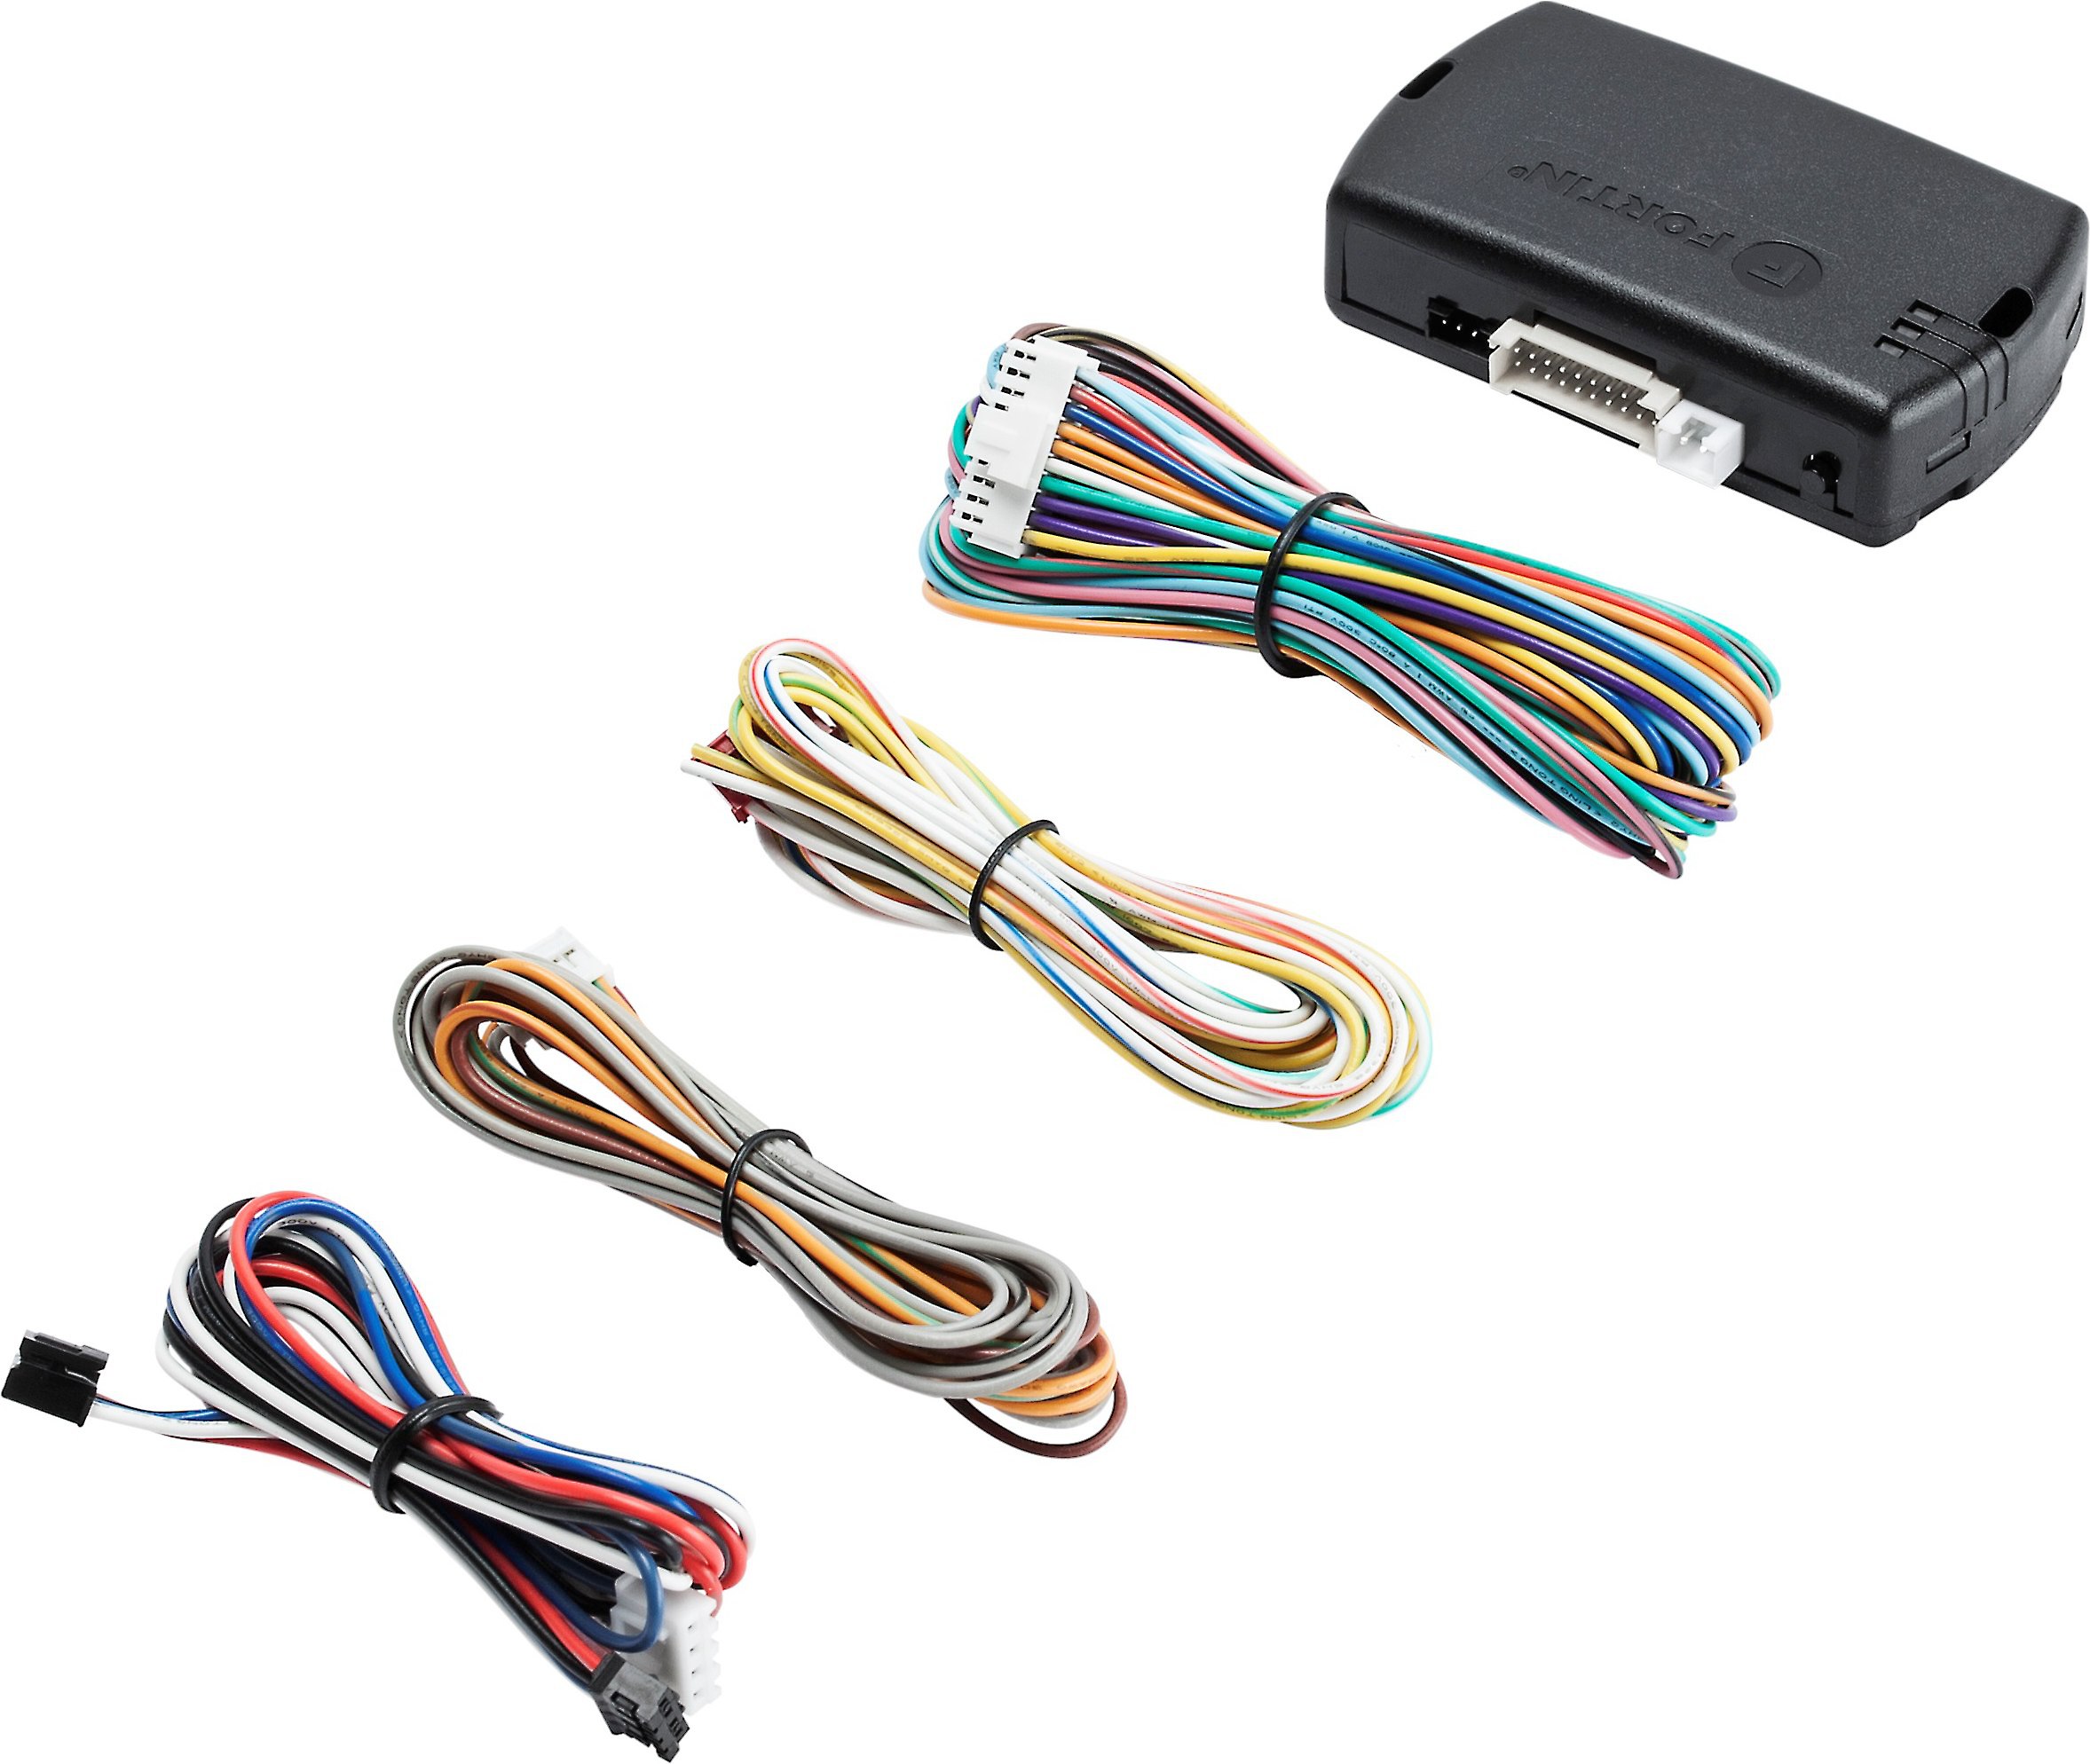 2015 Kia Sorento Remote Start Wiring Harness Guide from images.crutchfieldonline.com